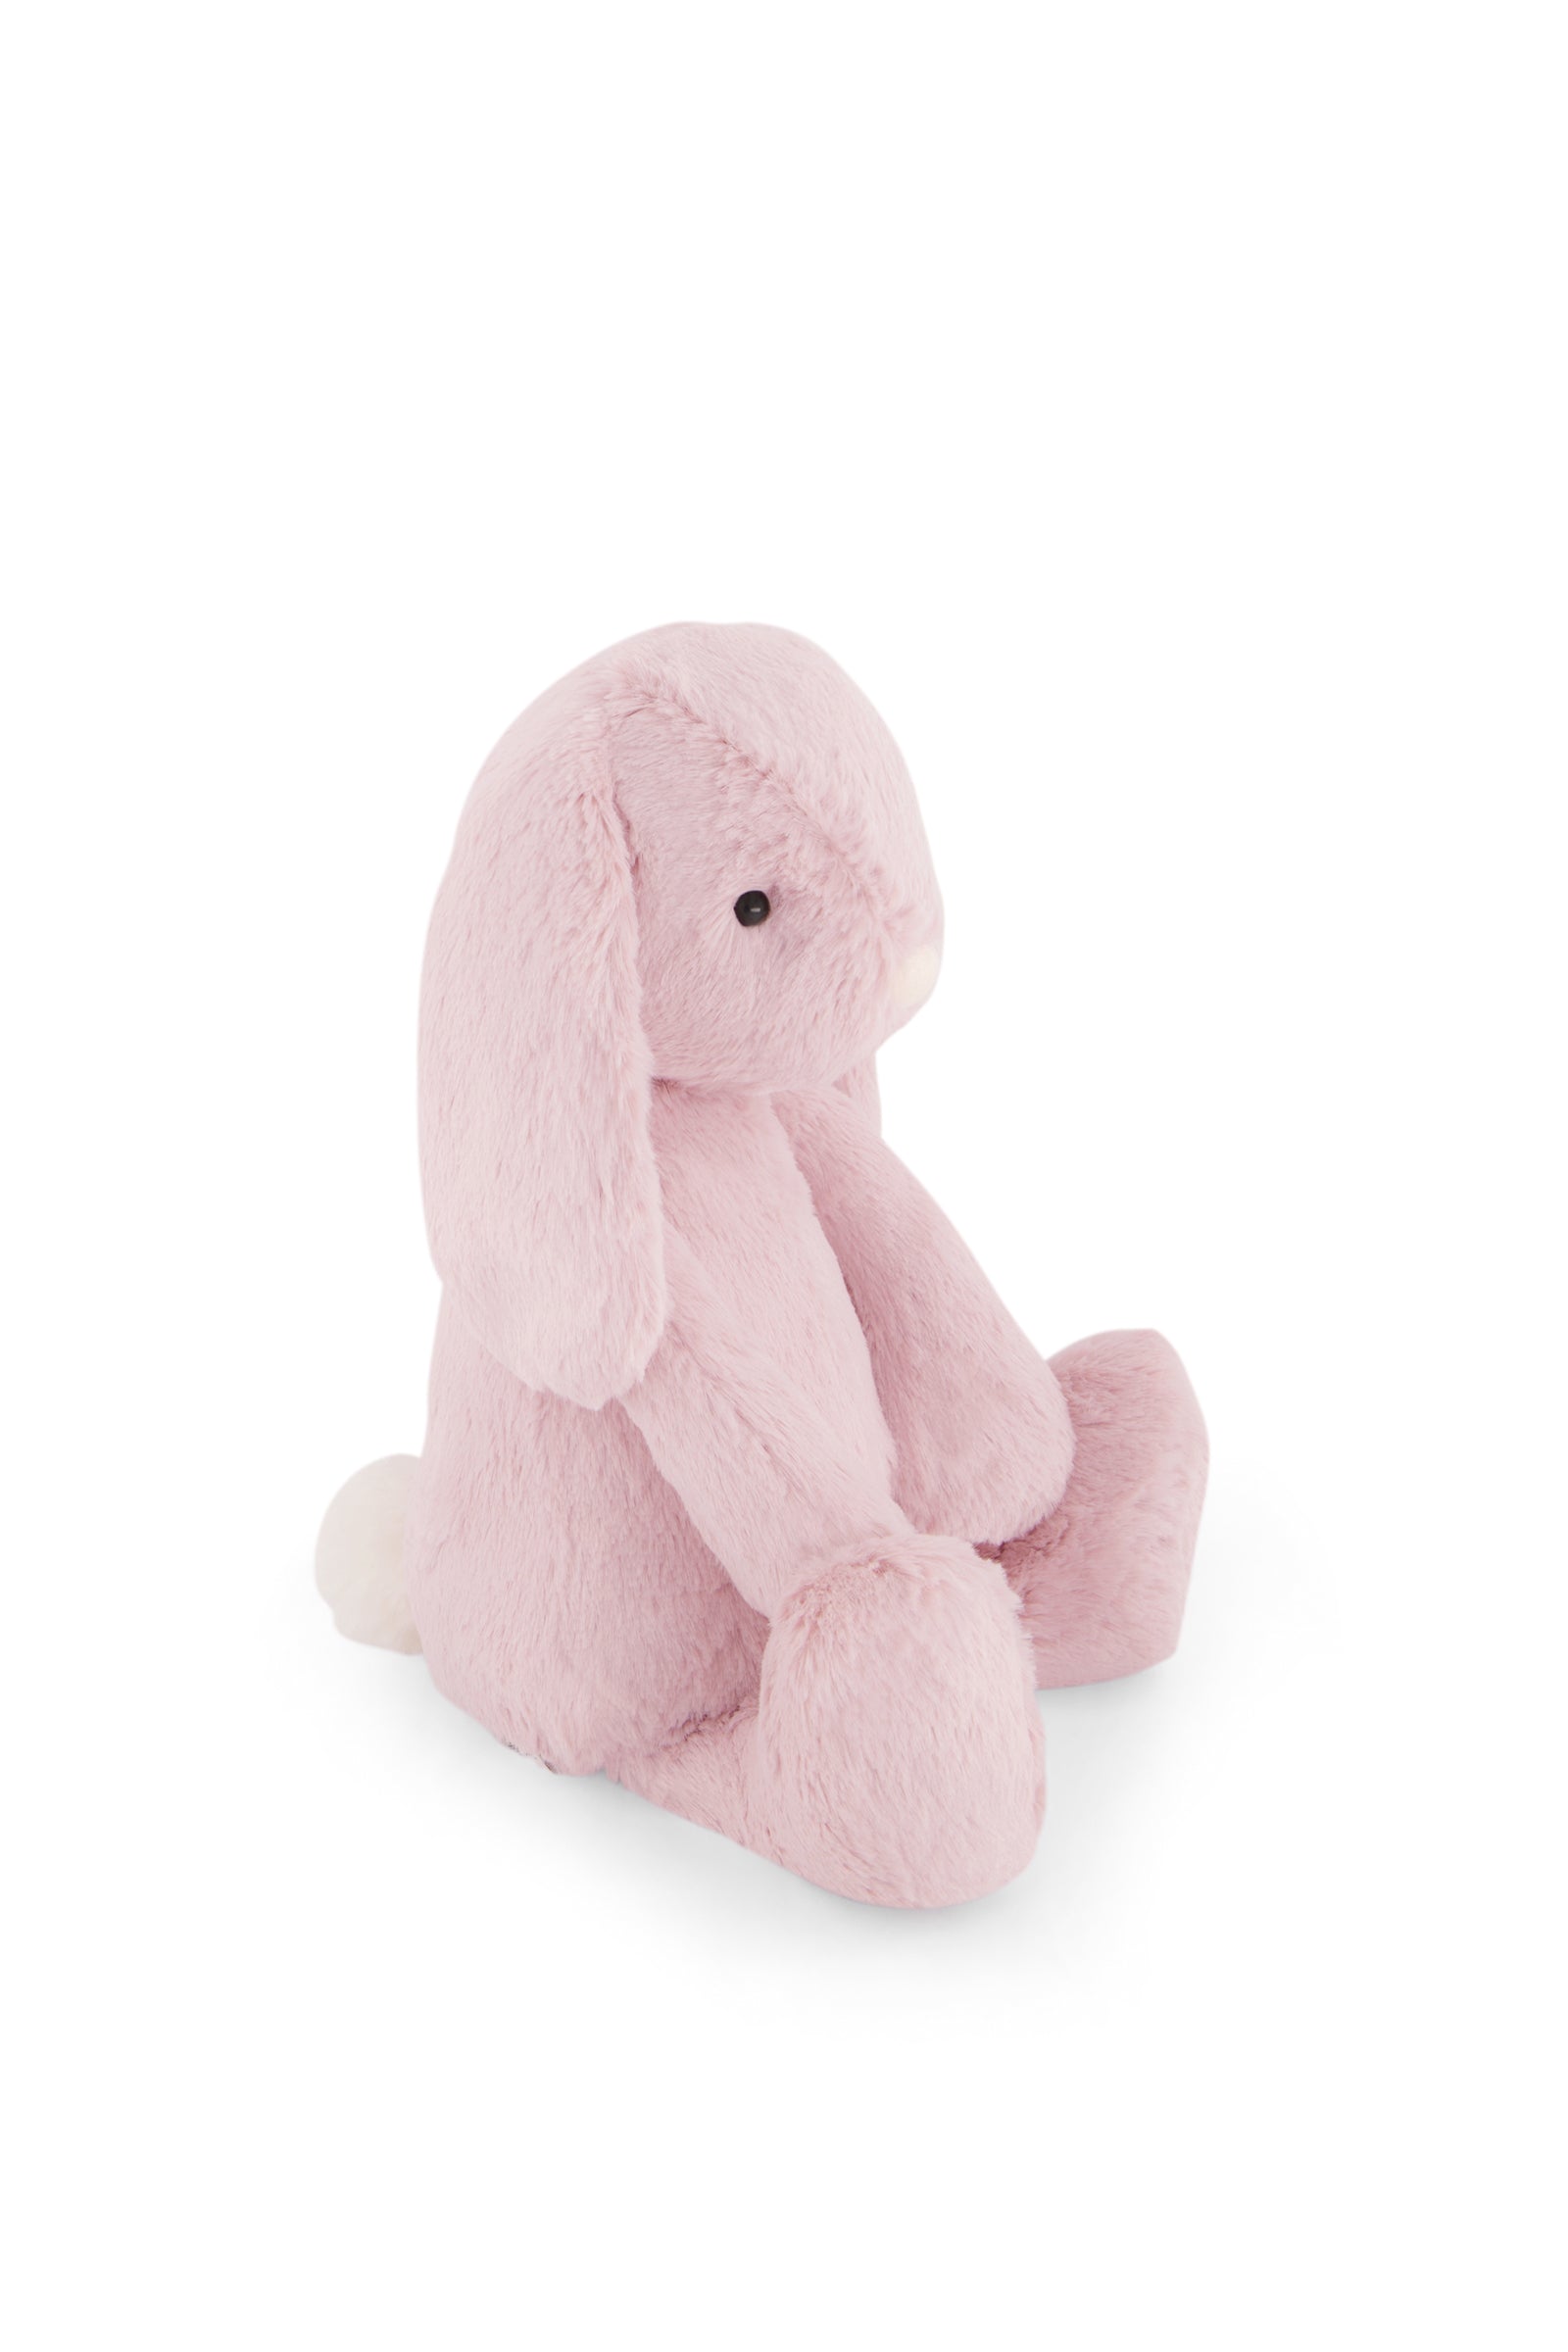 Snuggle Bunnies Penelope the Bunny - Powder Pink